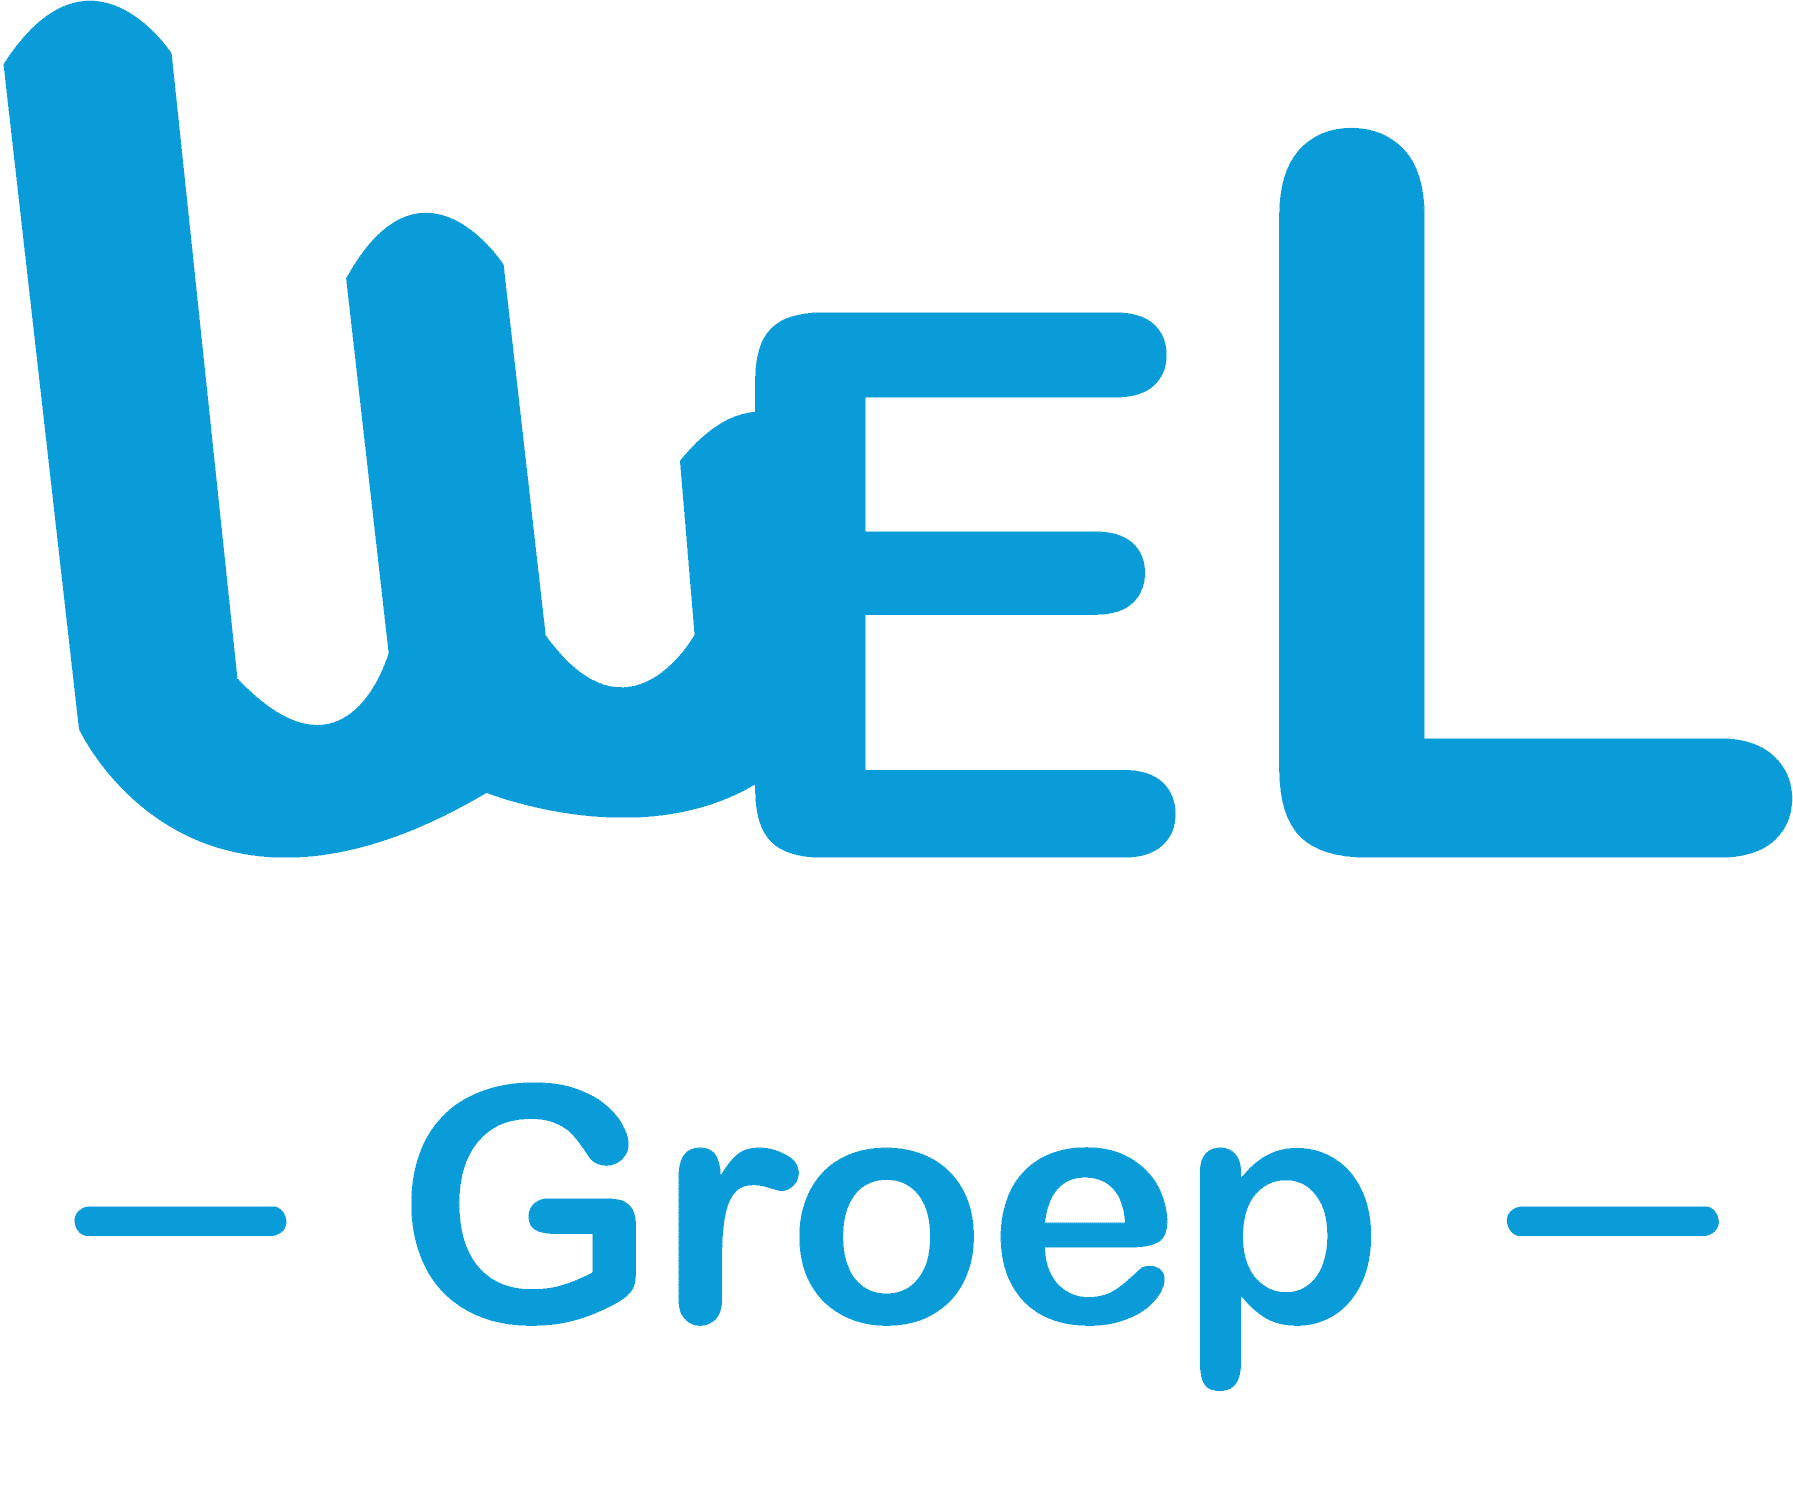 WeLGroepEps-copy